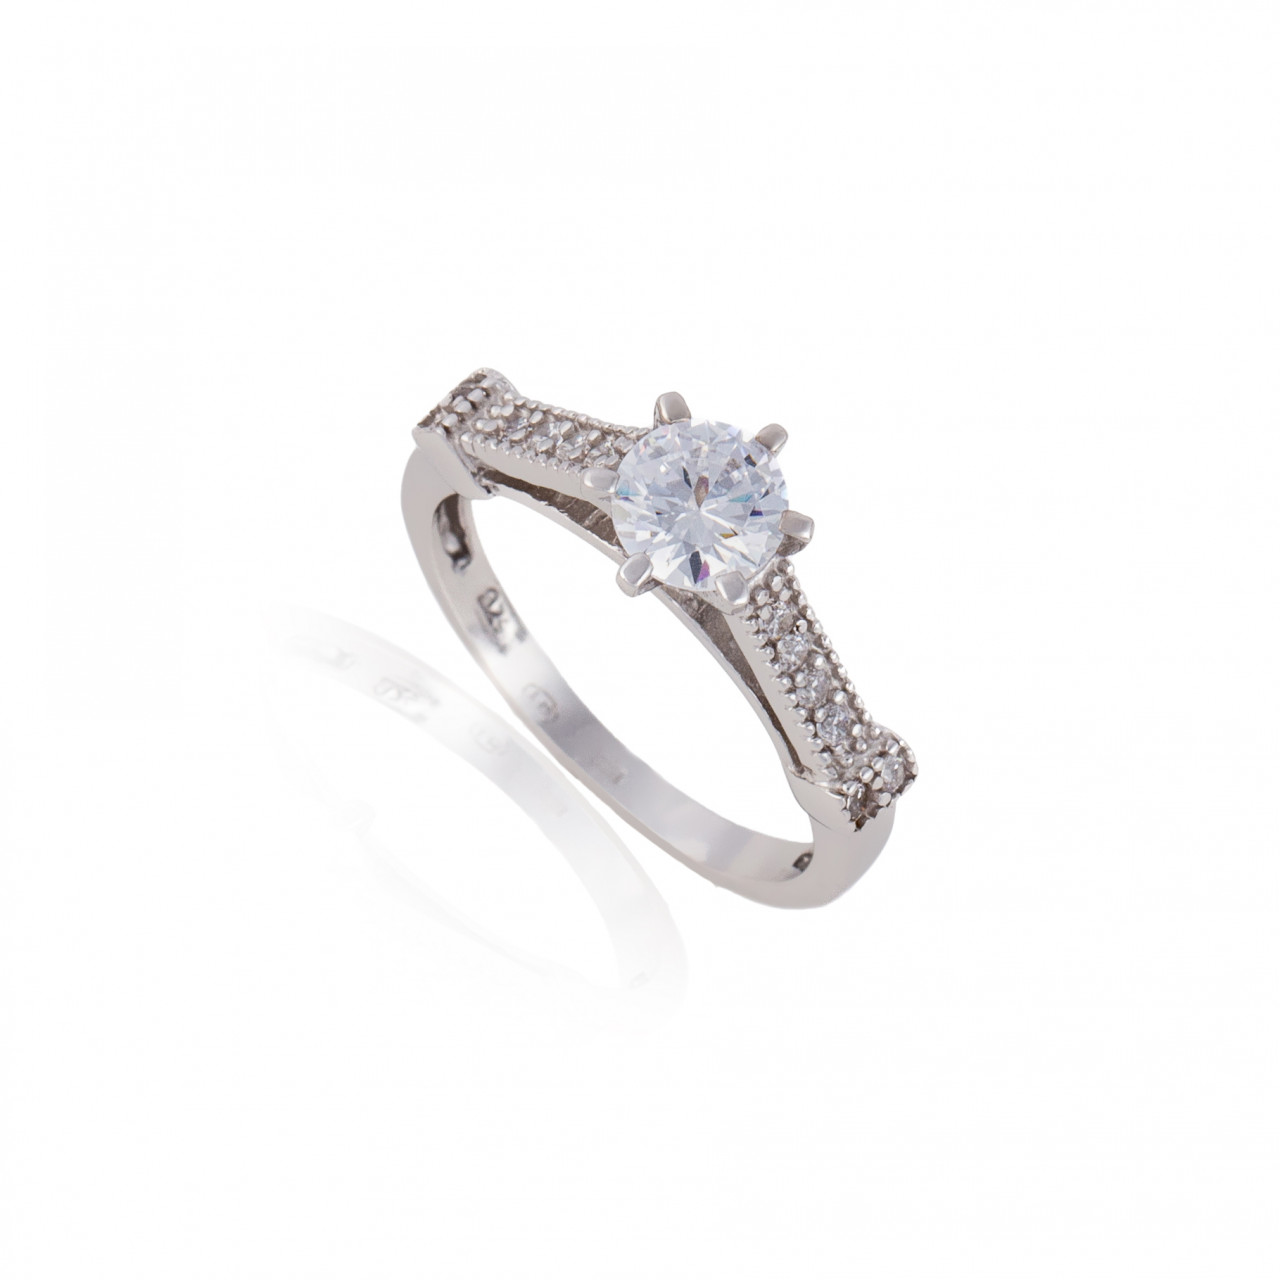 inelul de logodna si verigheta pe acelasi deget Inel de logodna din argint 925 2.8g (Marime Inel-Verigheta: M53)